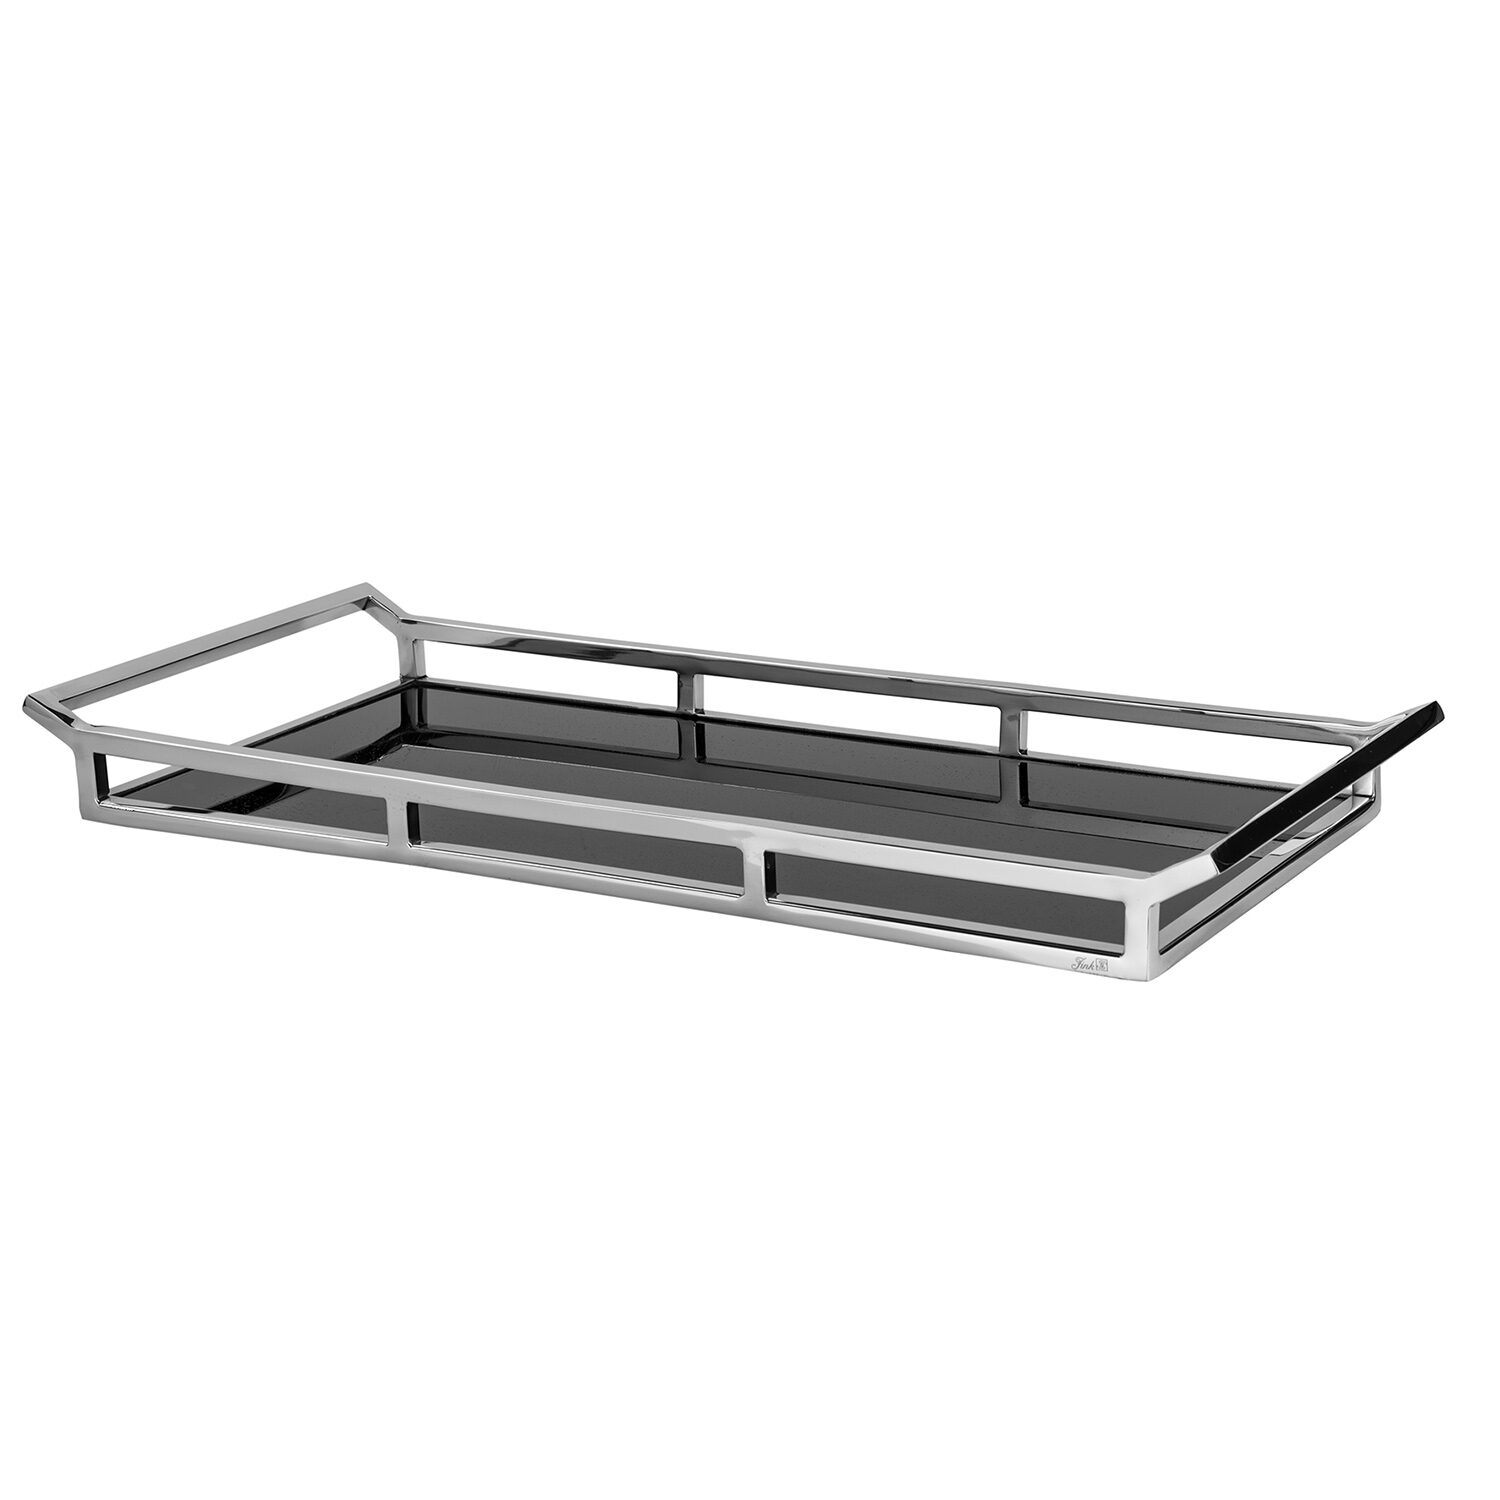 PIANO tray rectangular, stainless steel, black glass